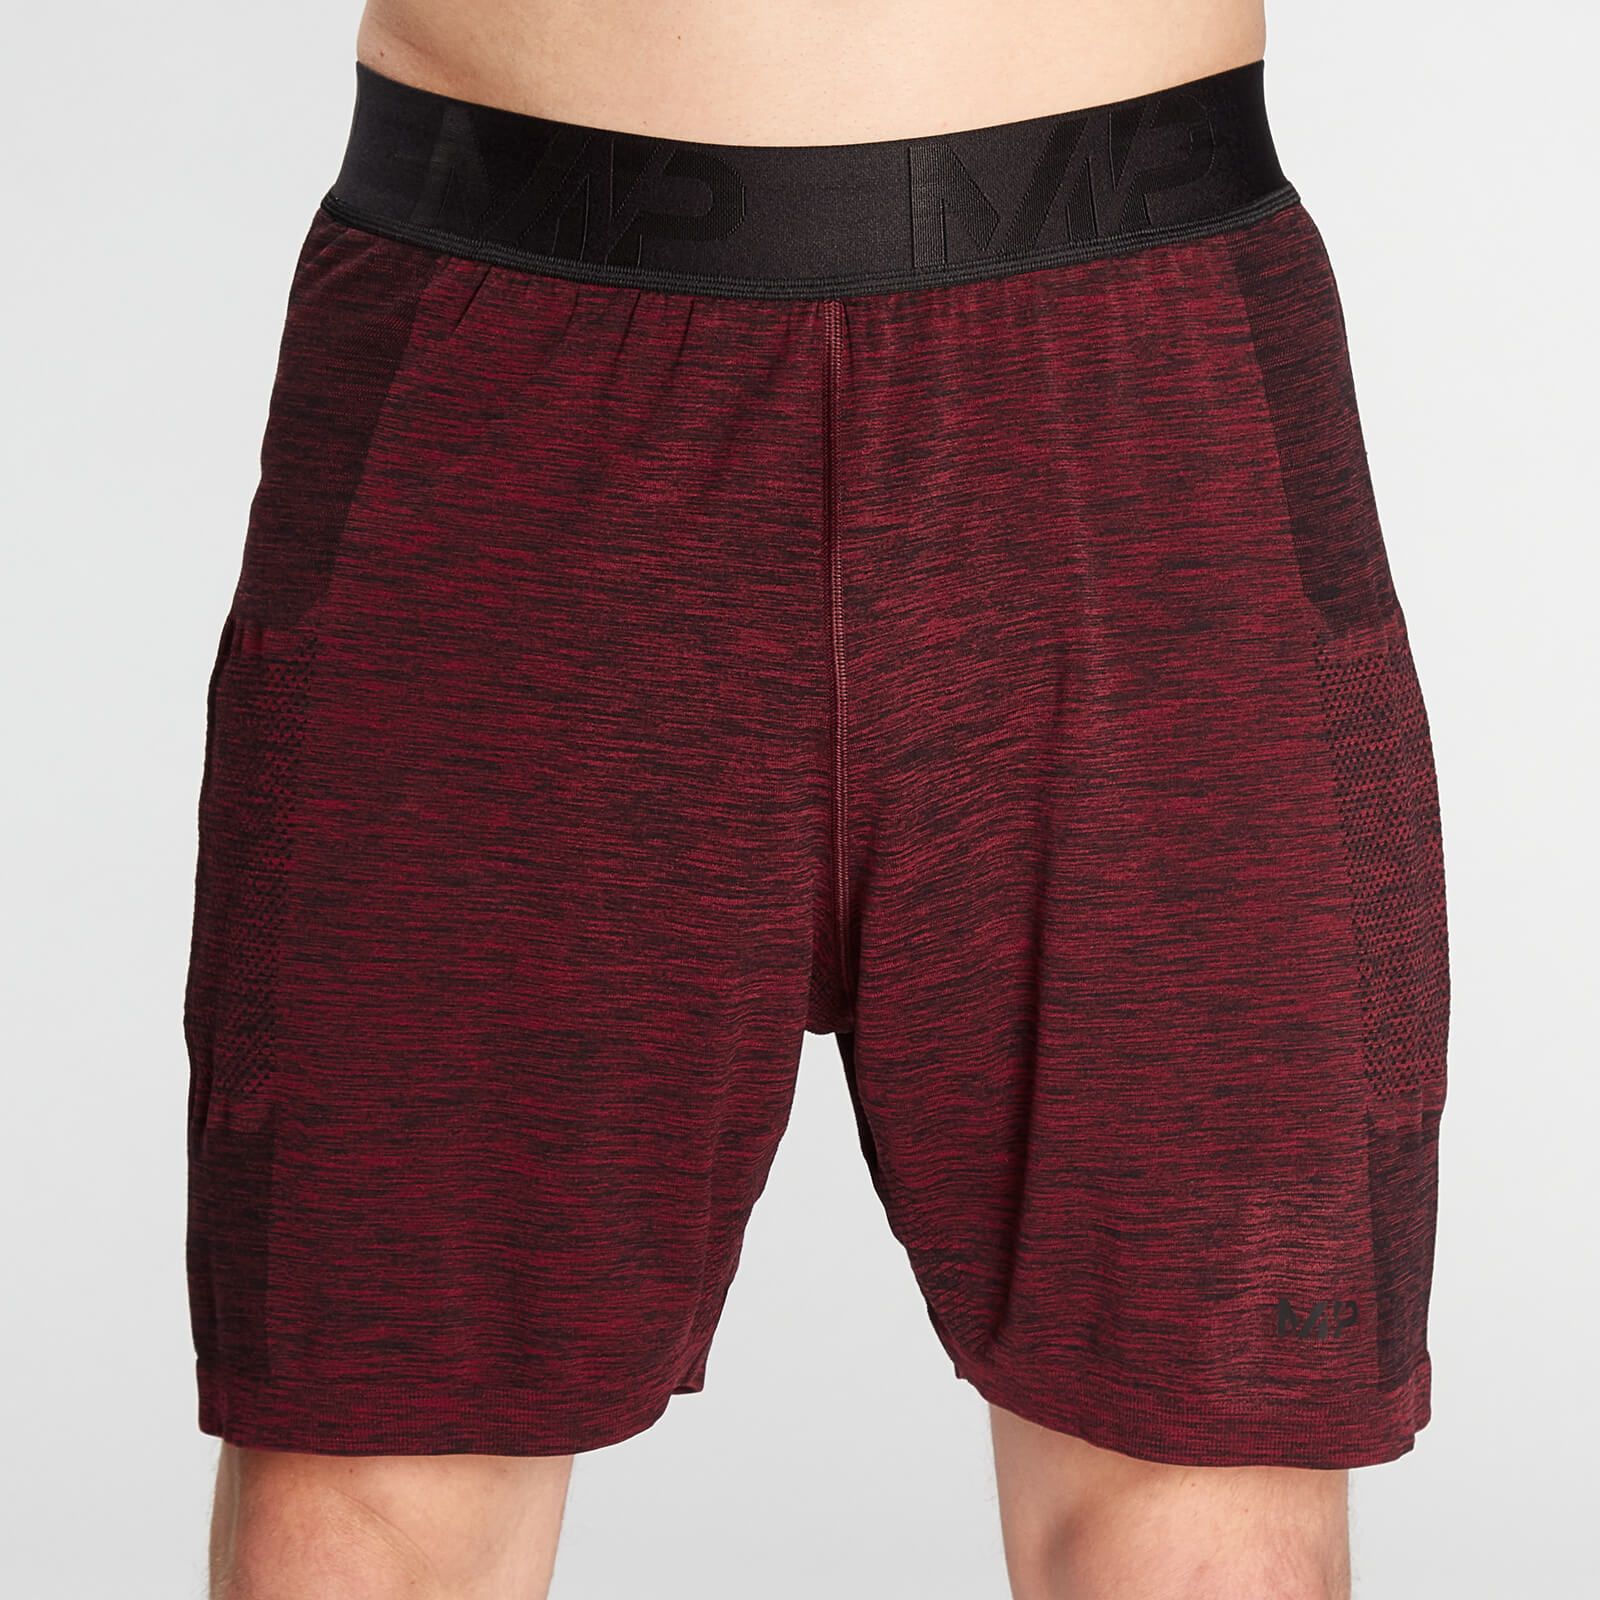 Men's Seamless Shorts, Red Marl